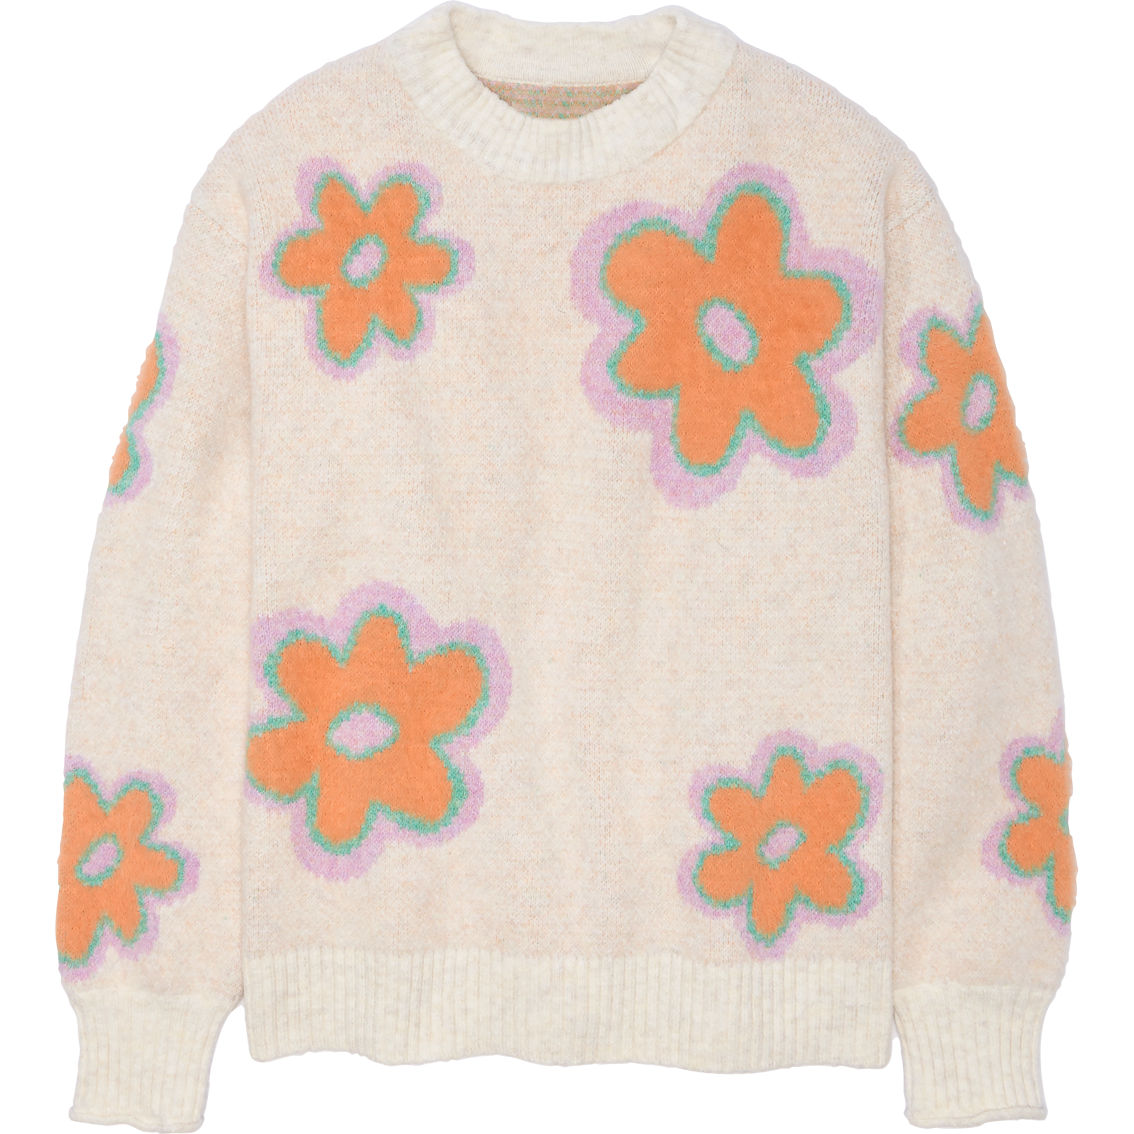 American Eagle Whoa So Soft Floral Crewneck Sweater | Sweaters ...